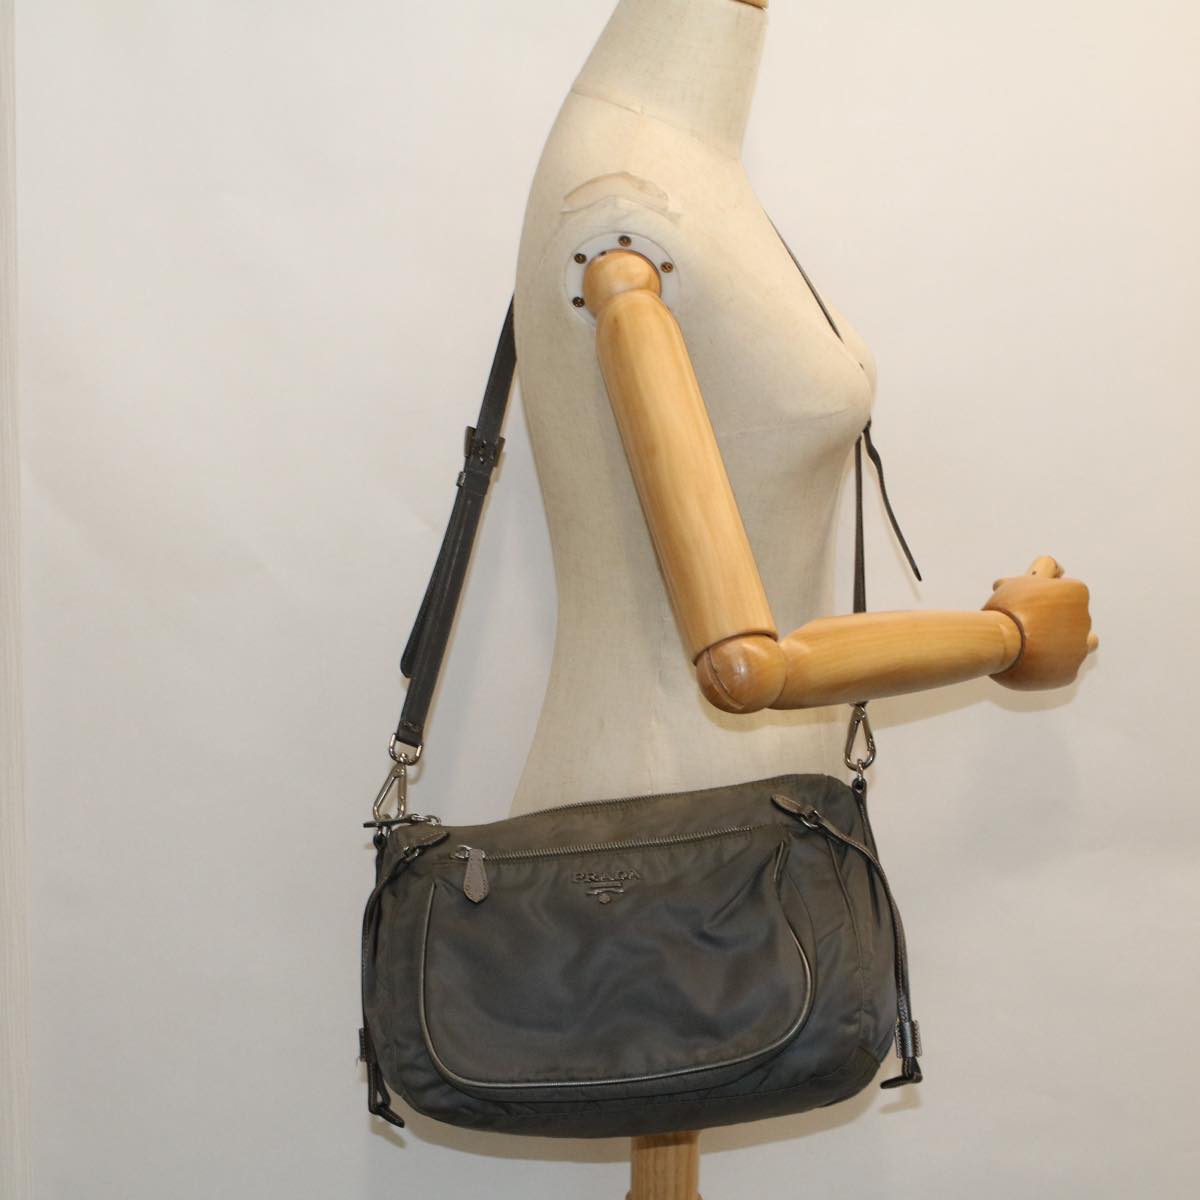 PRADA Shoulder Bag Nylon Leather Gray Auth 53845